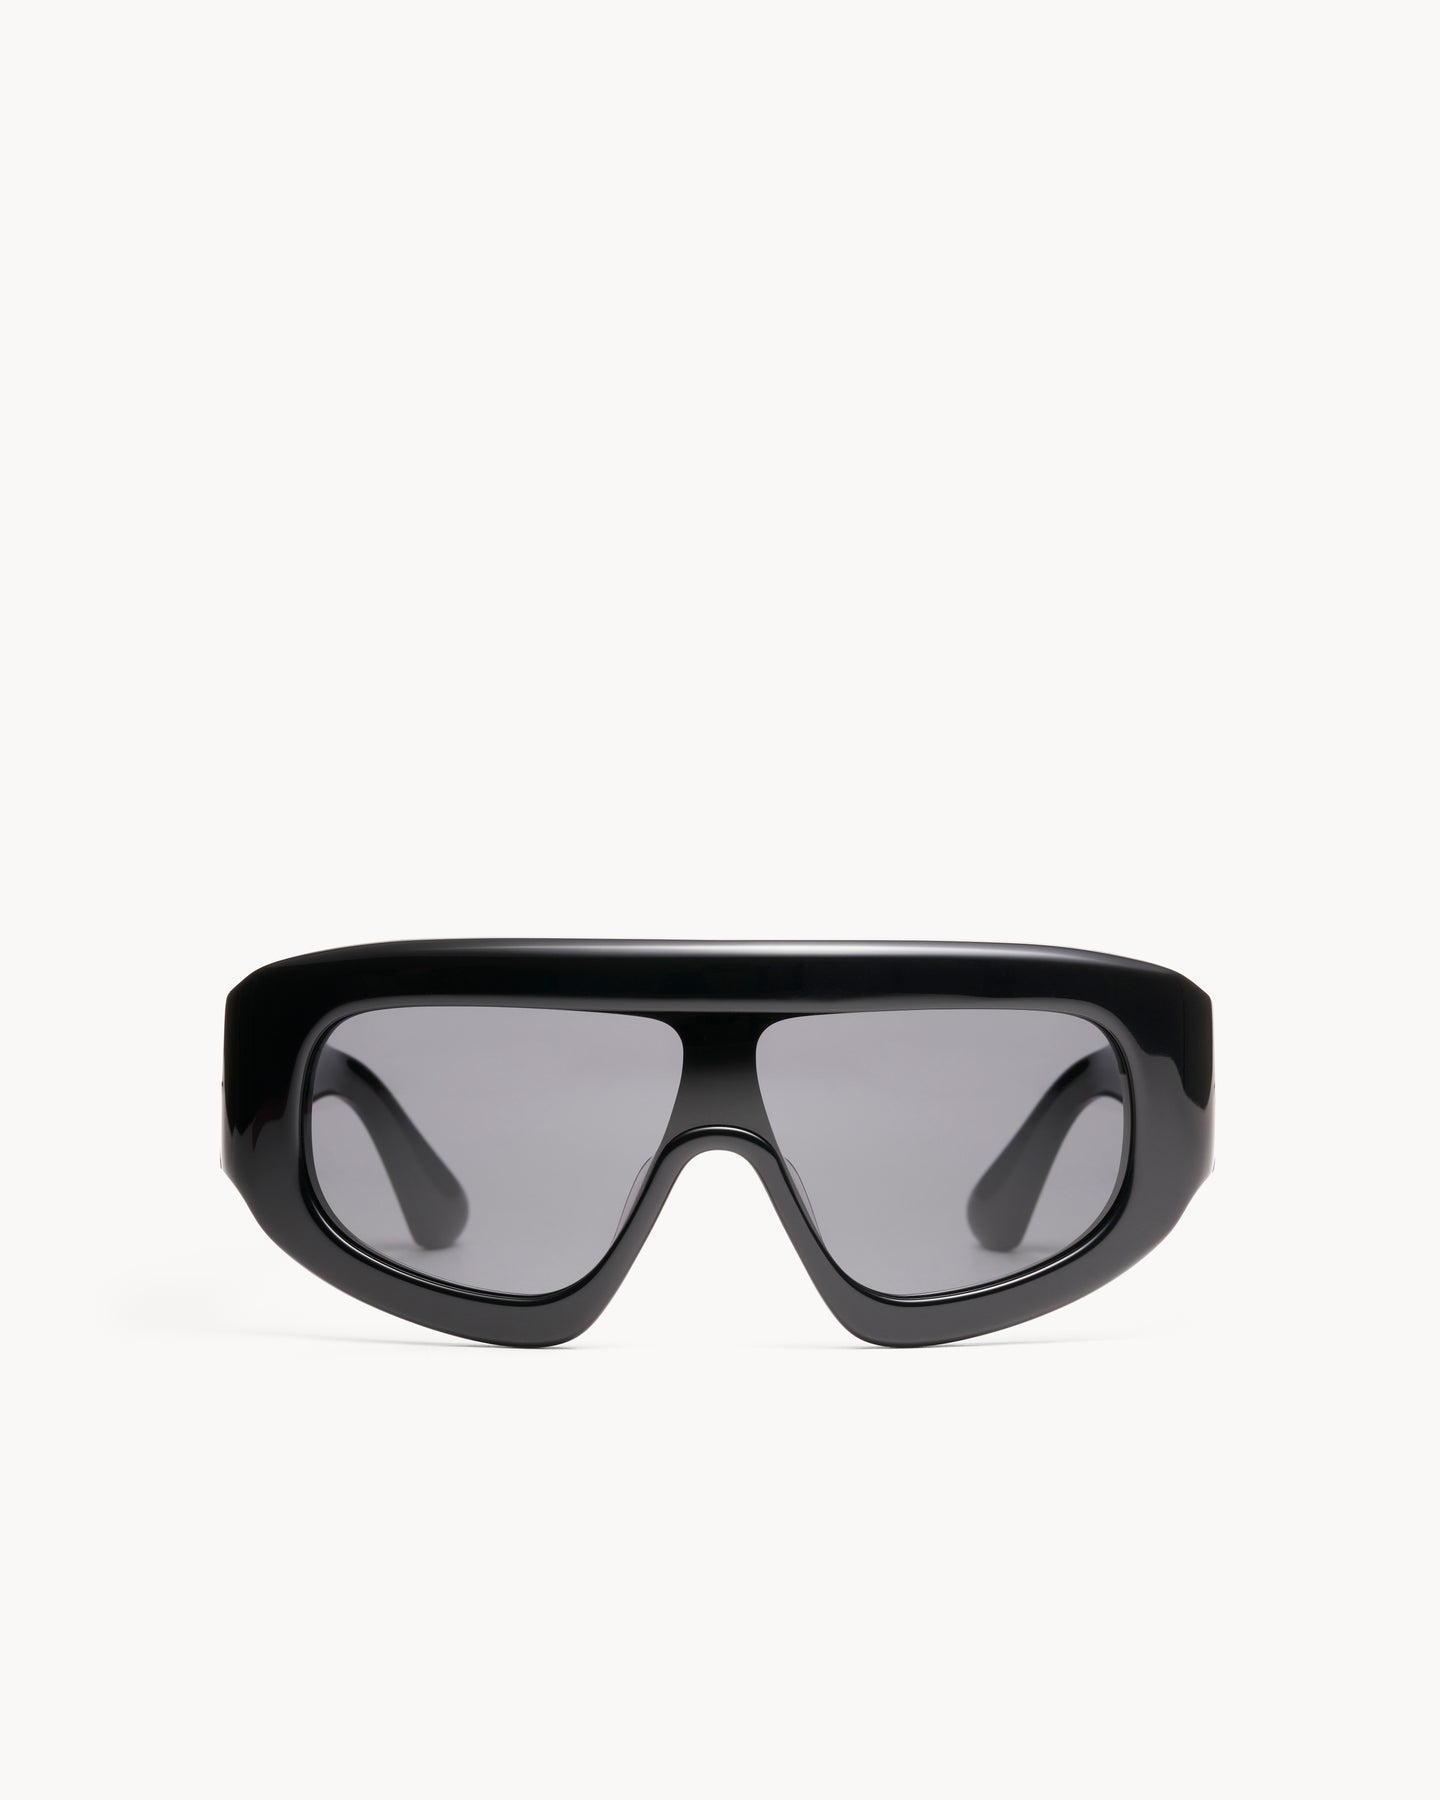 Port Tanger Saraa Sunglasses in Black Acetate and Black Lenses 1